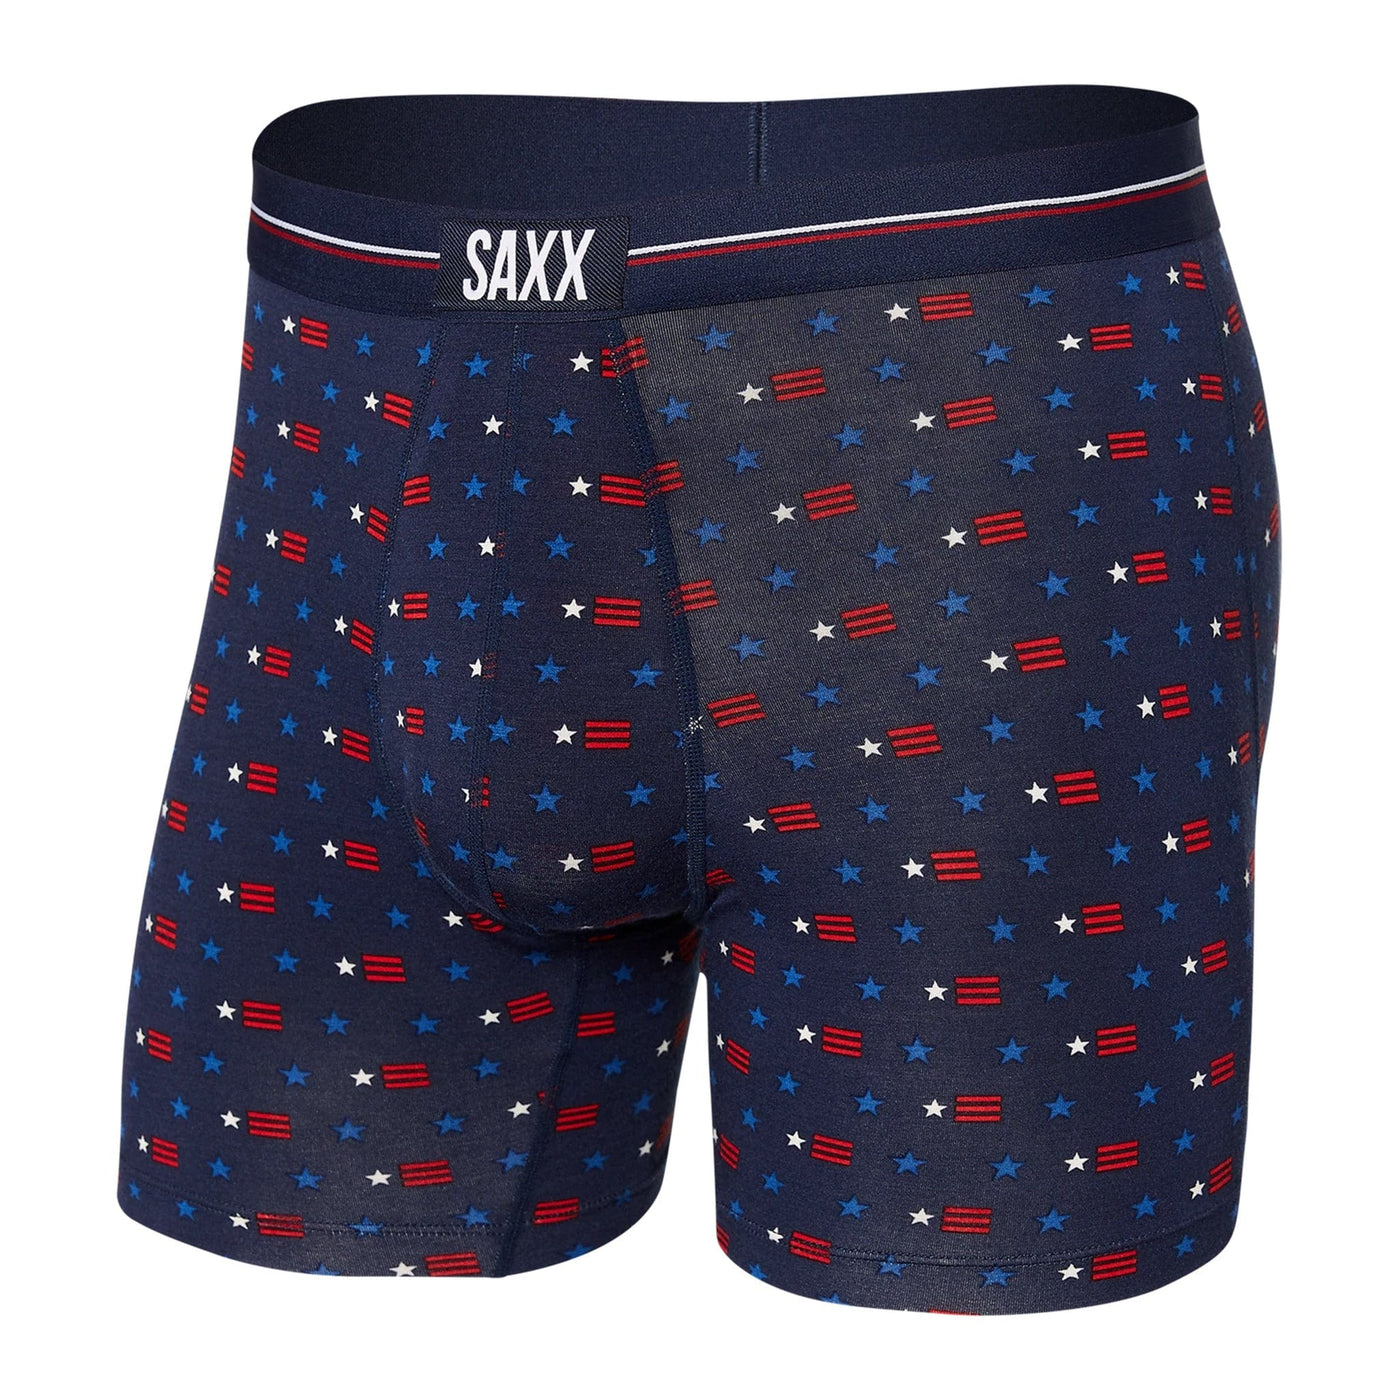 Saxx Vibe Boxers - Liberty Navy